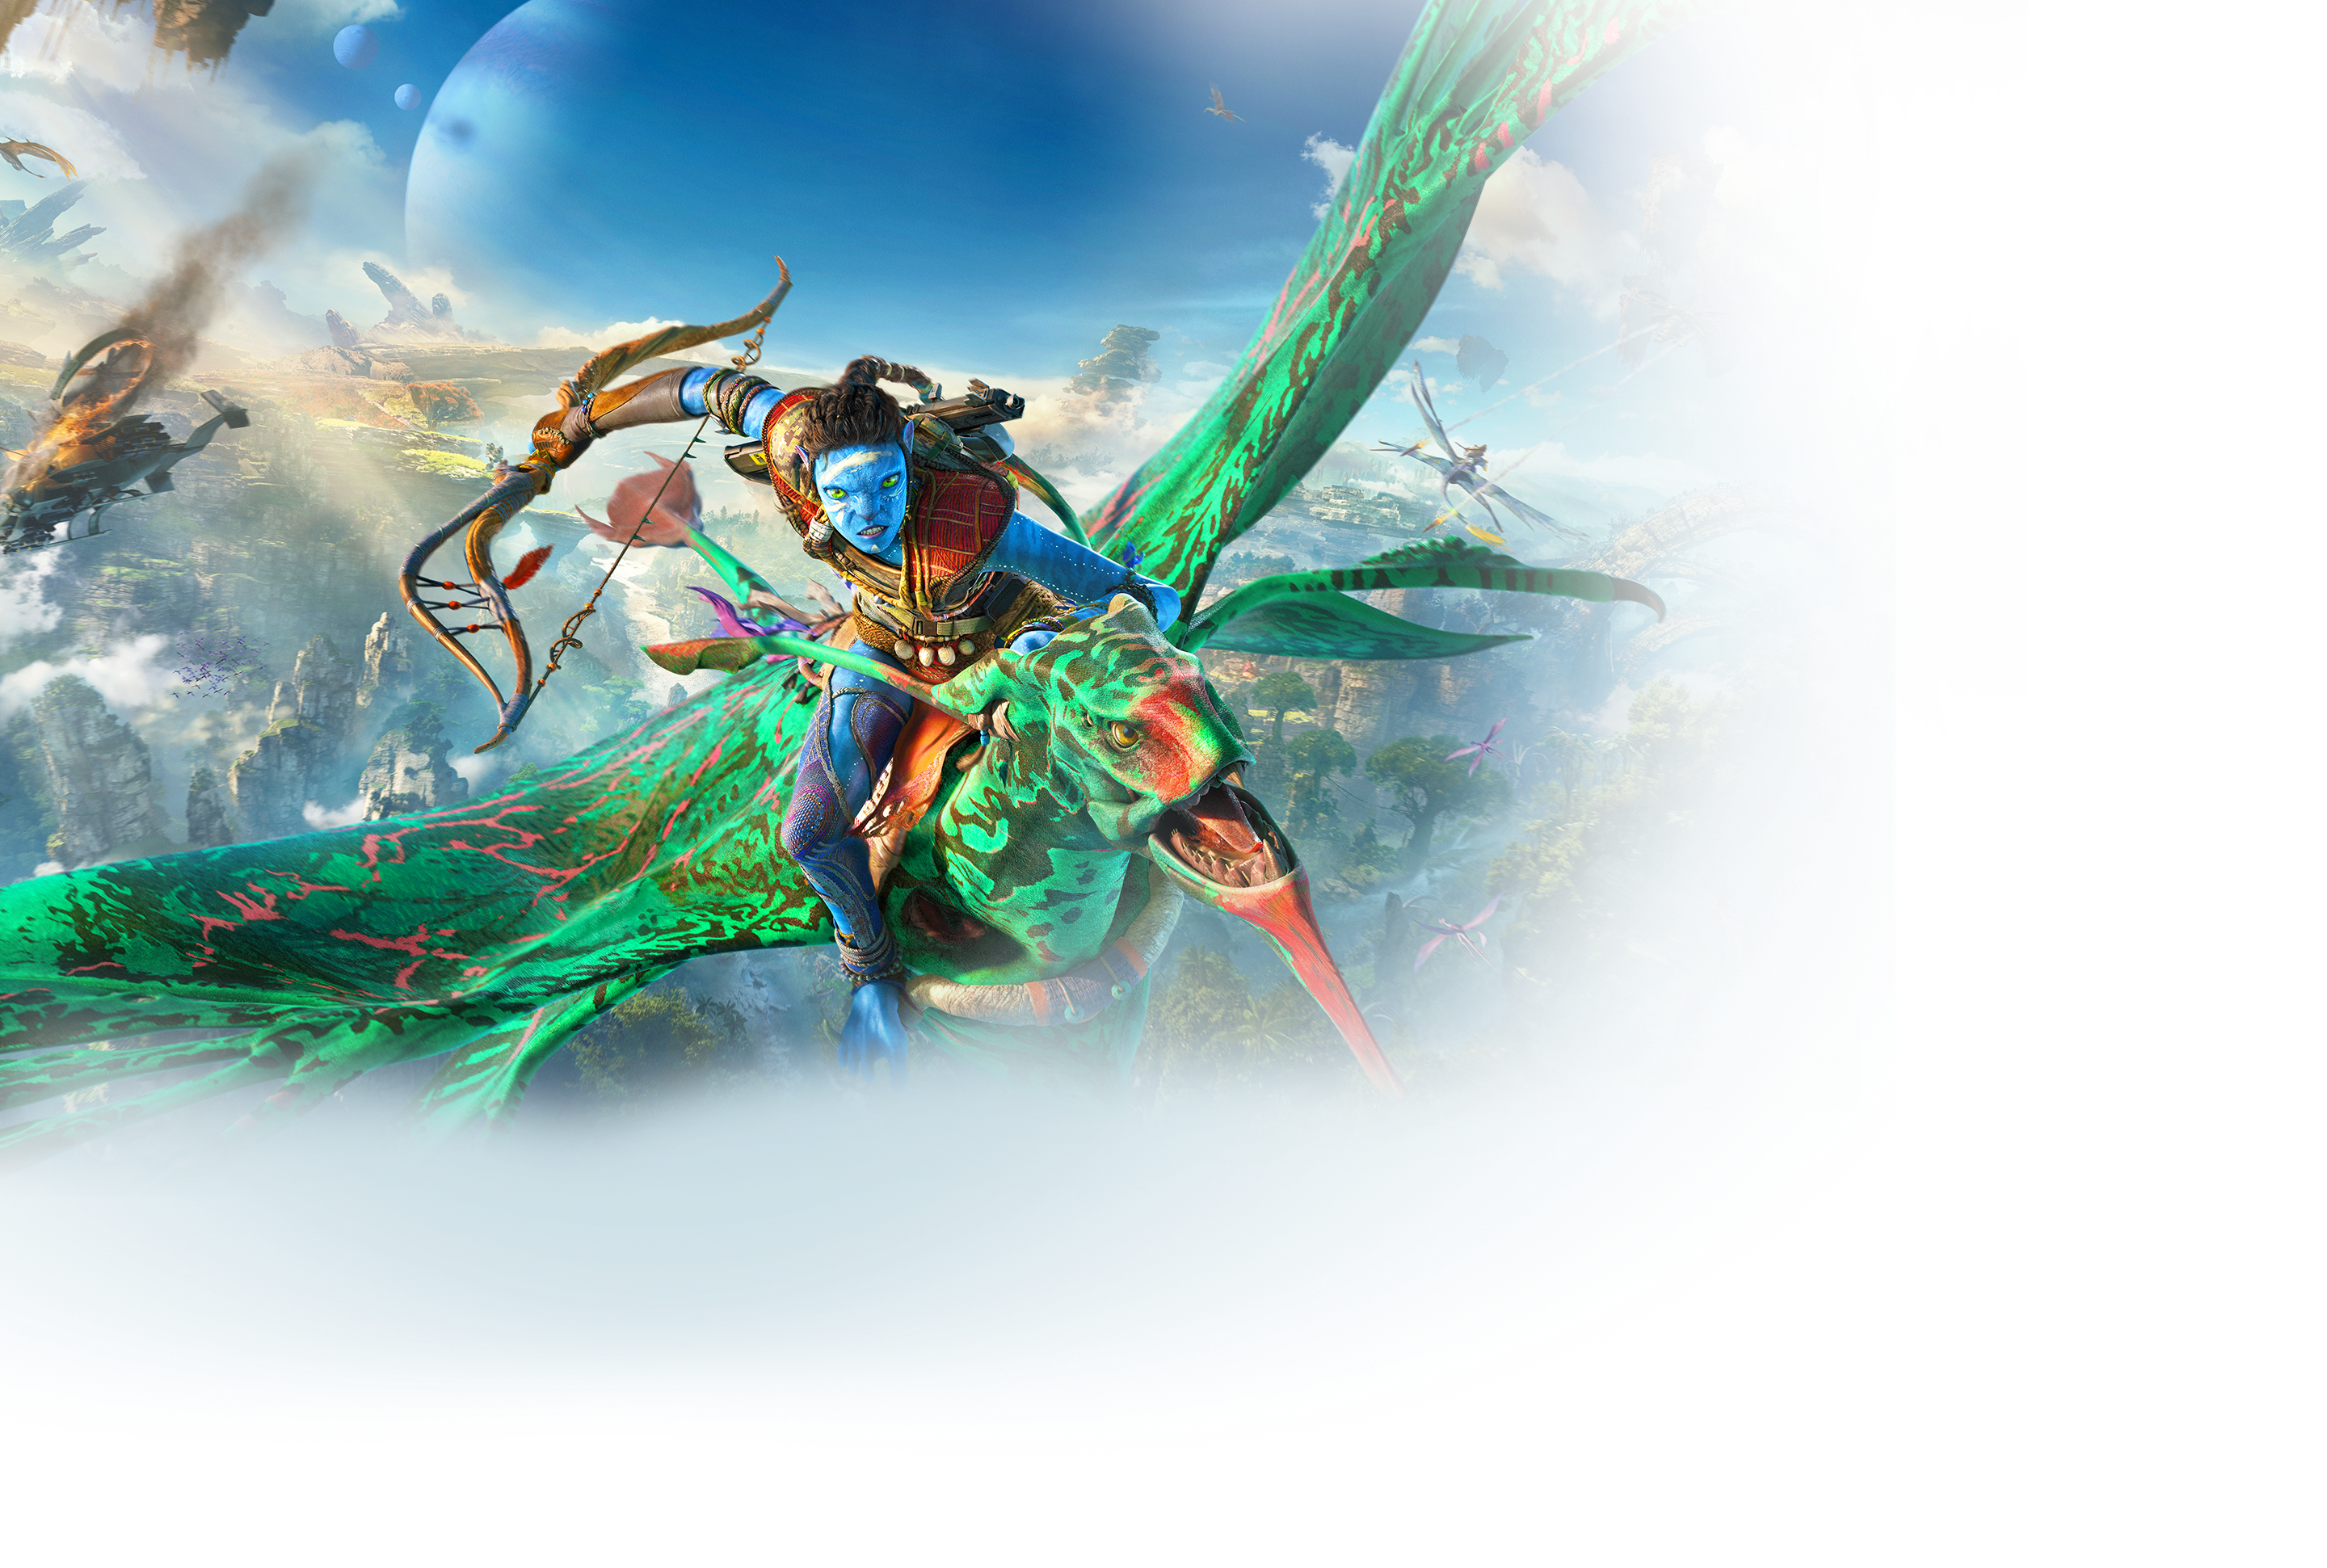 That Flying Creature From Avatar by azunyan95 on DeviantArt